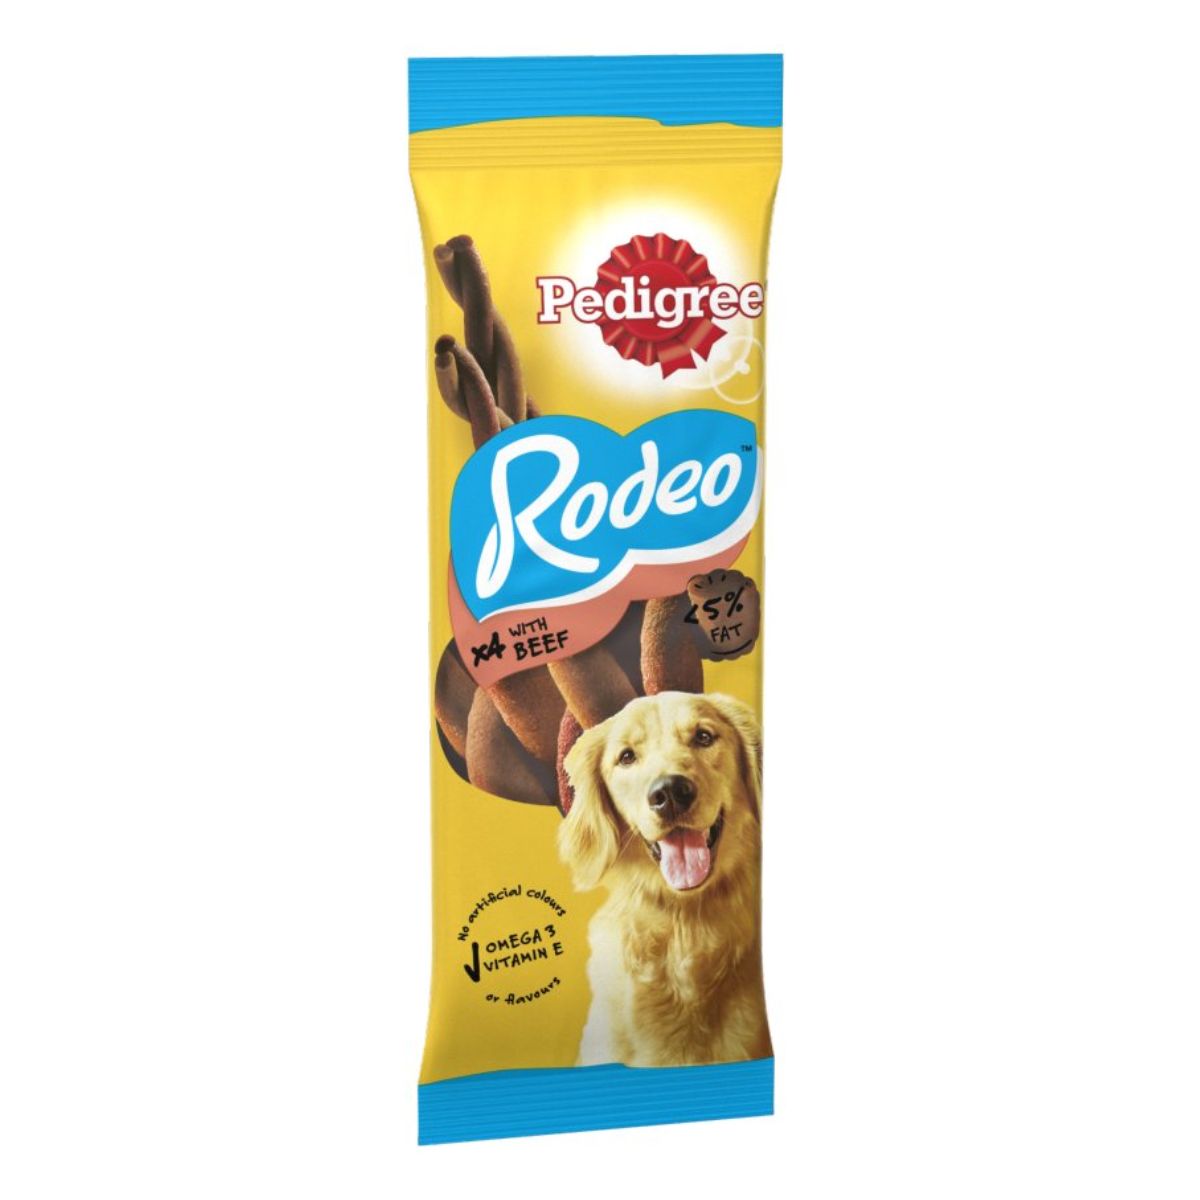 Pedigree - Rodeo Adult Dog Treats Beef 4 Sticks - 70g dog biscuits.